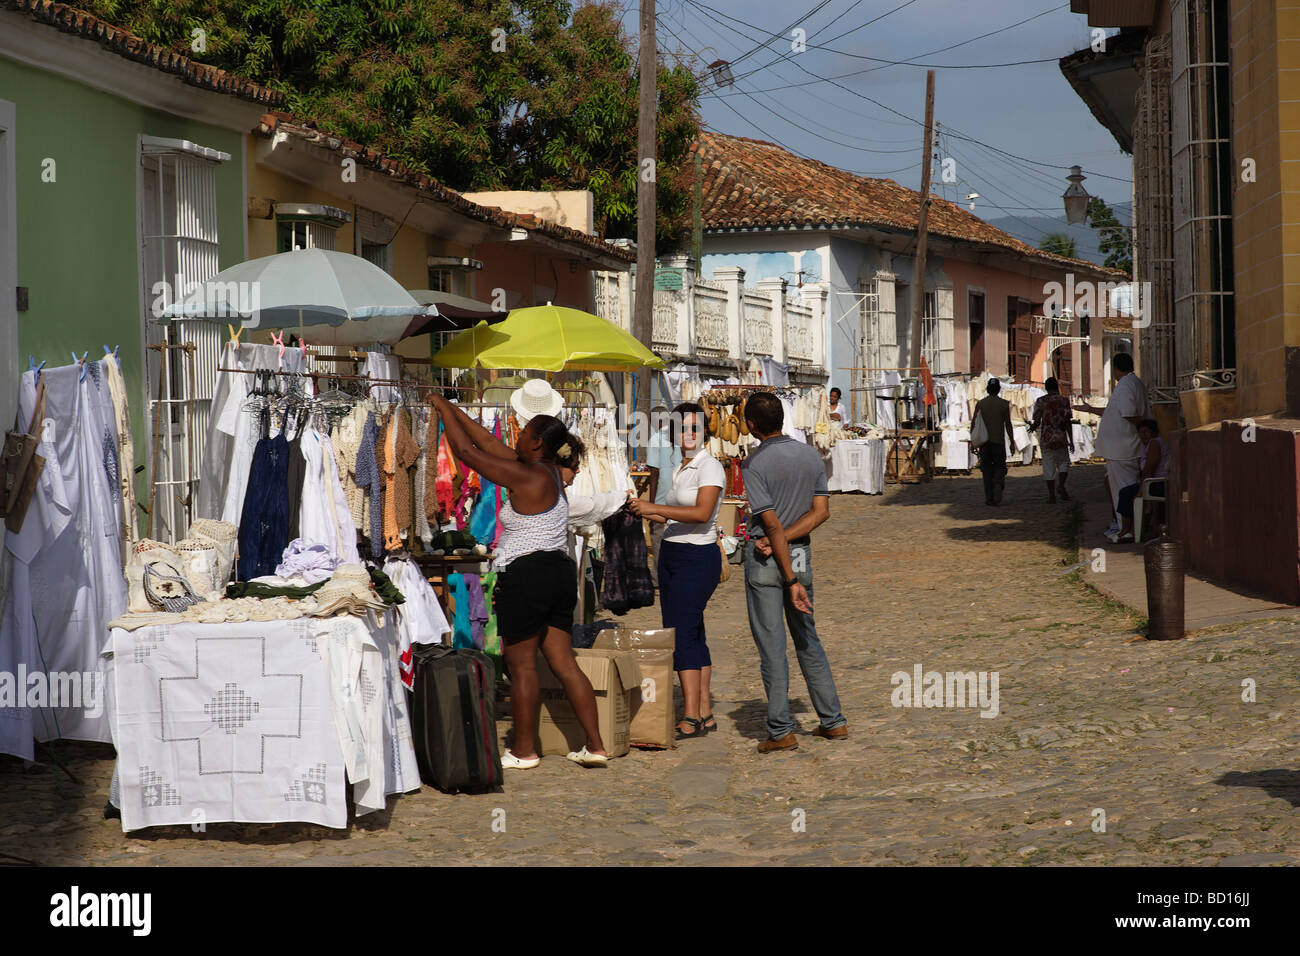 Straße Stände, Trinidad, Sancti Spíritus, Kuba, Westindische Inseln Stockfoto